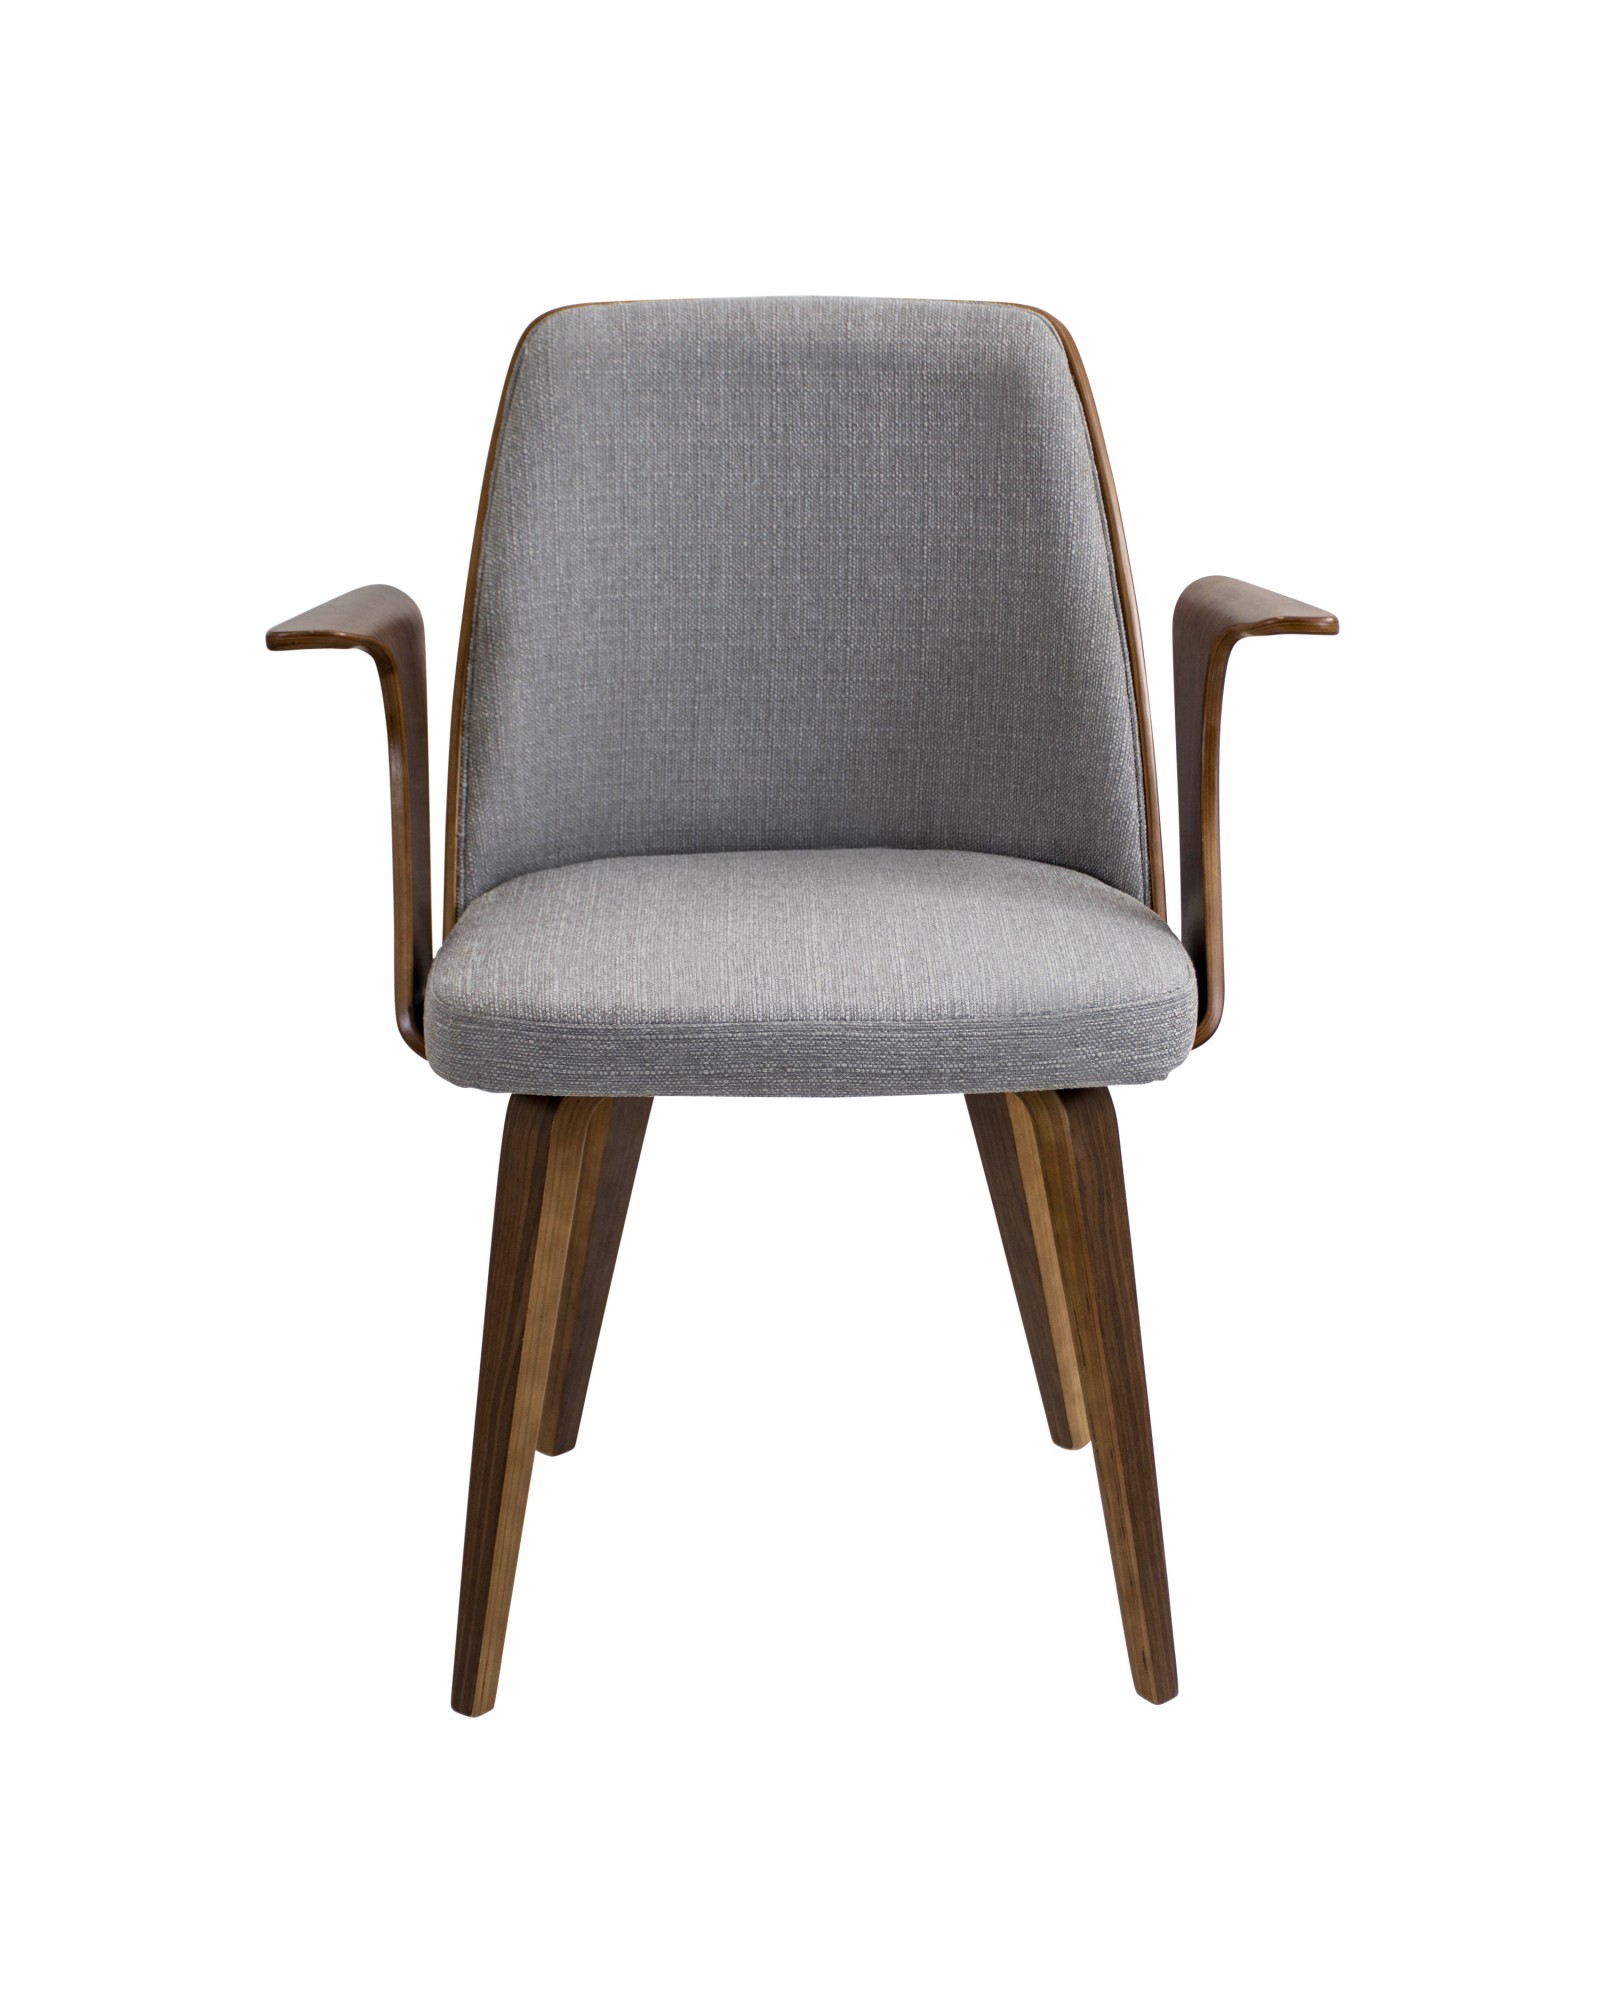 Verdana Mid-Century Modern Dining/Accent Chair in Walnut with Grey Fabric